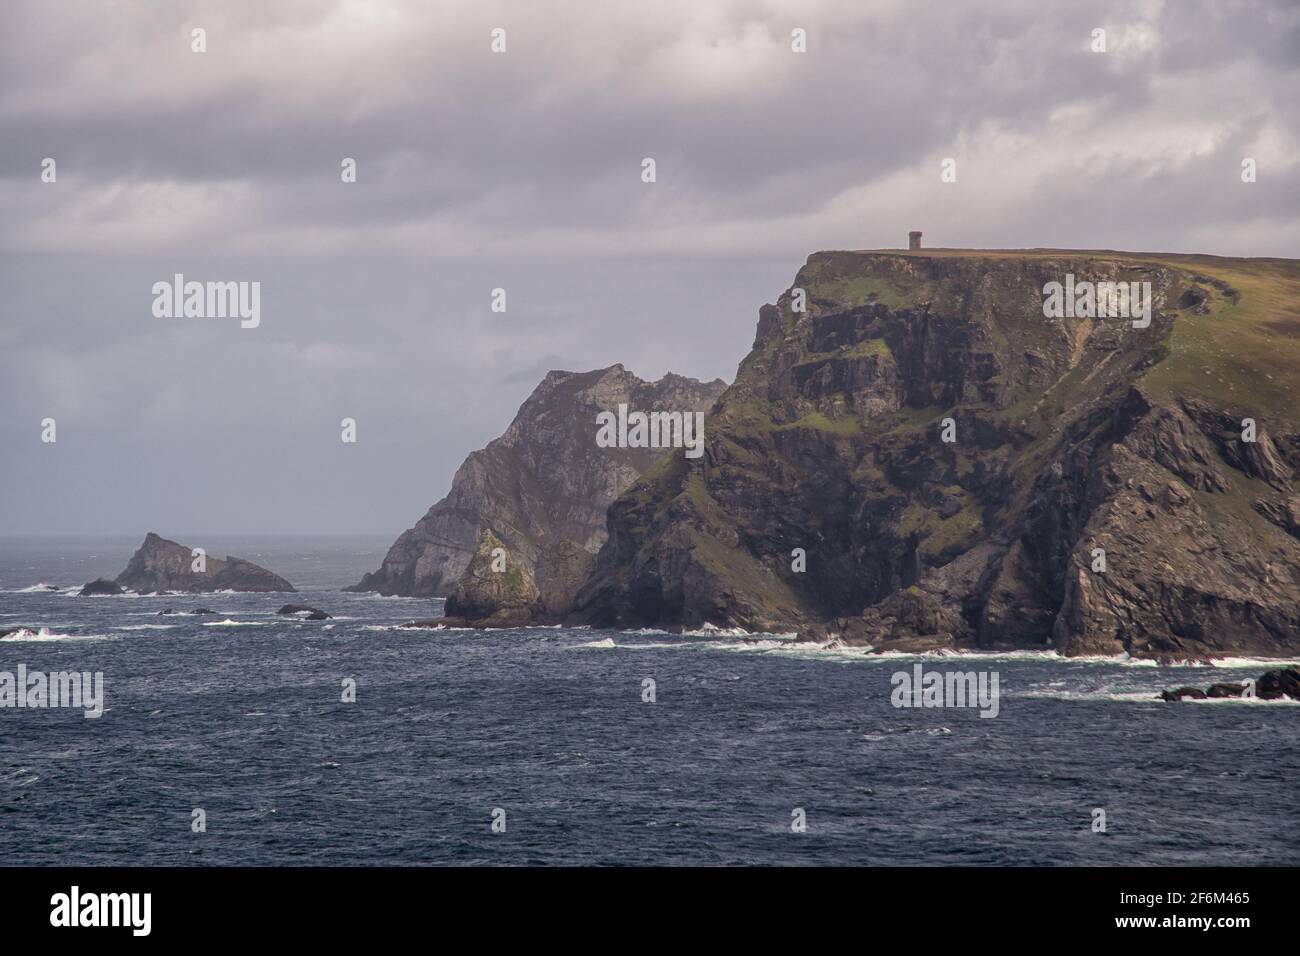 Cliffs on the Wild Atlantic Way on the coast of Ireland Stock Photo